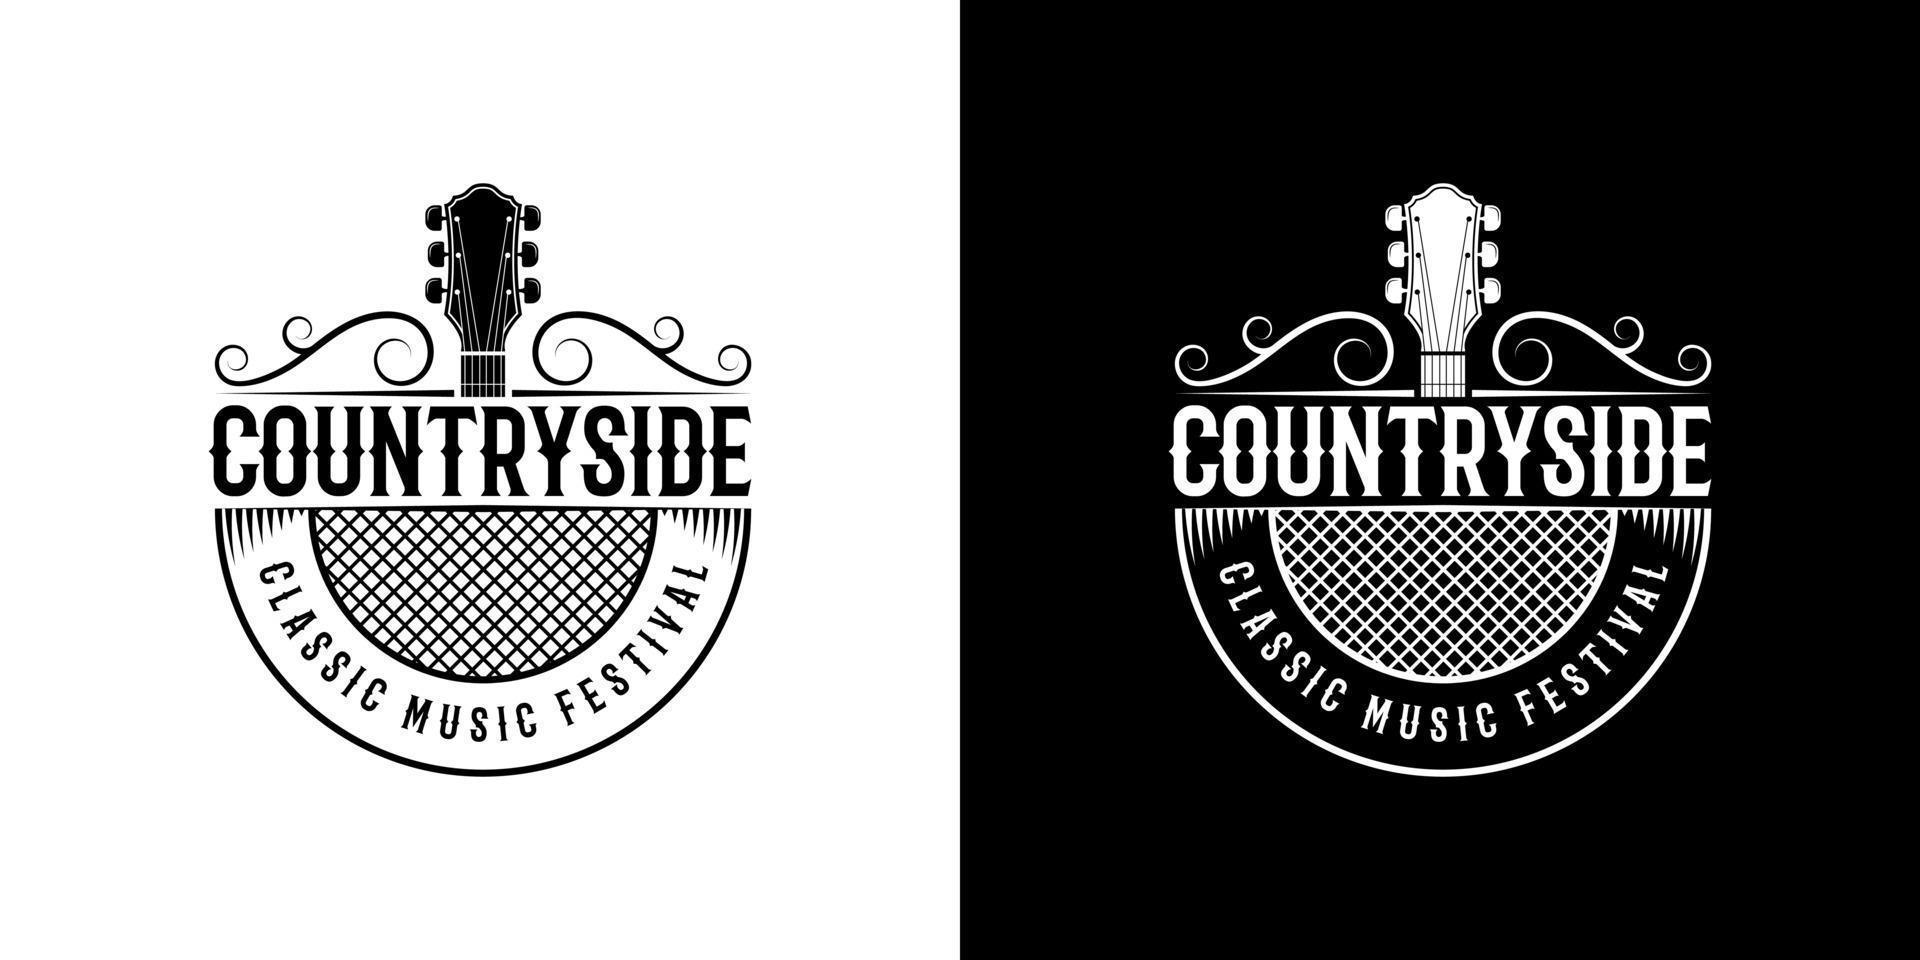 vetor de design de logotipo de música ocidental vintage retrô country